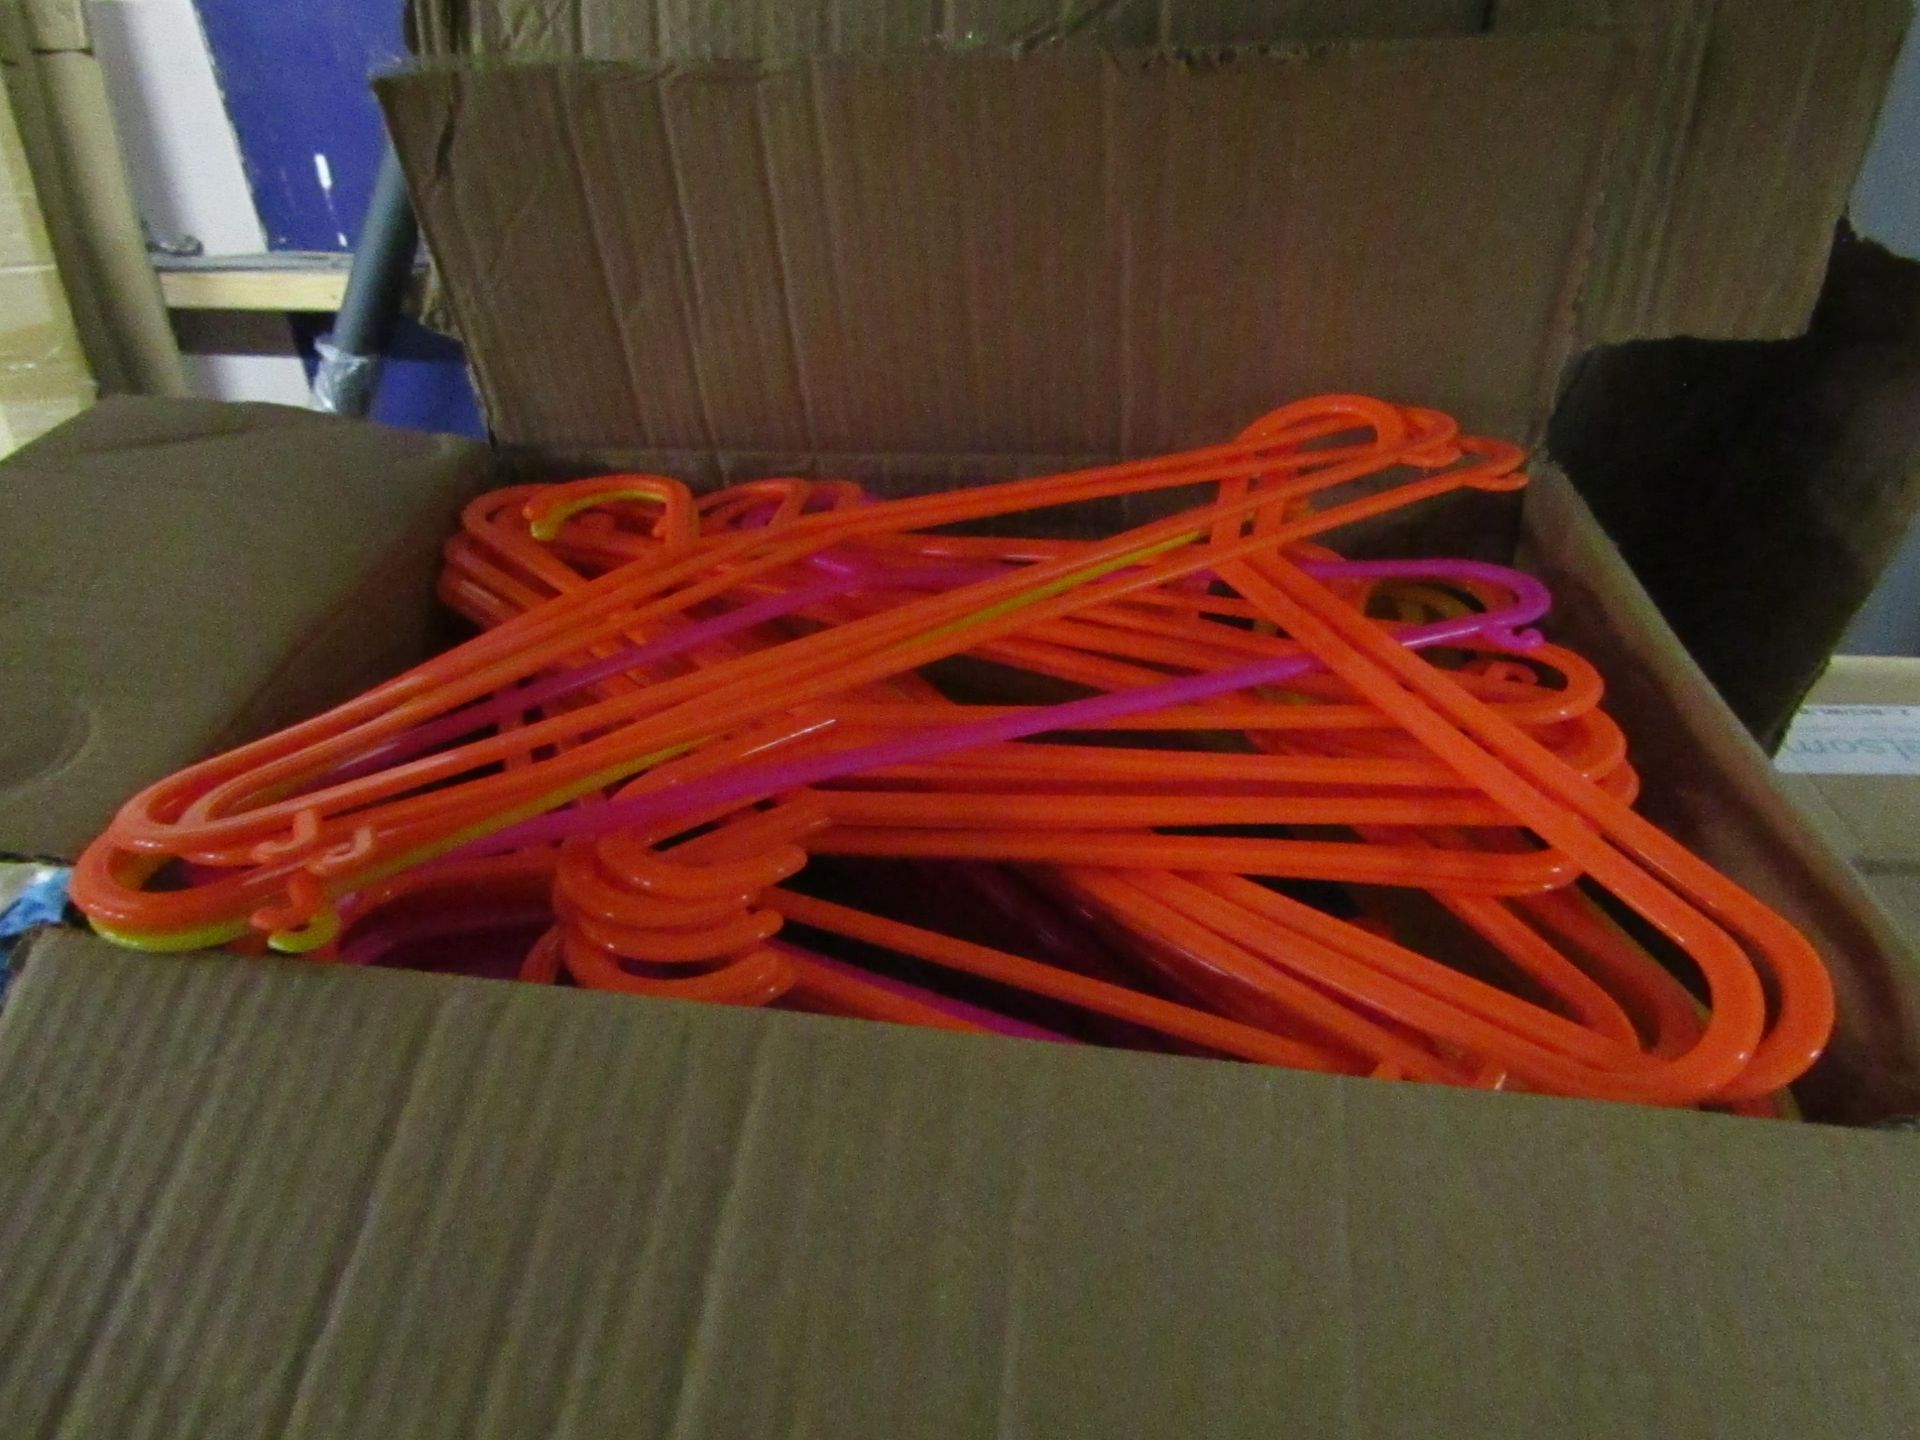 600x Rainbow plastic hangers, new and boxed.